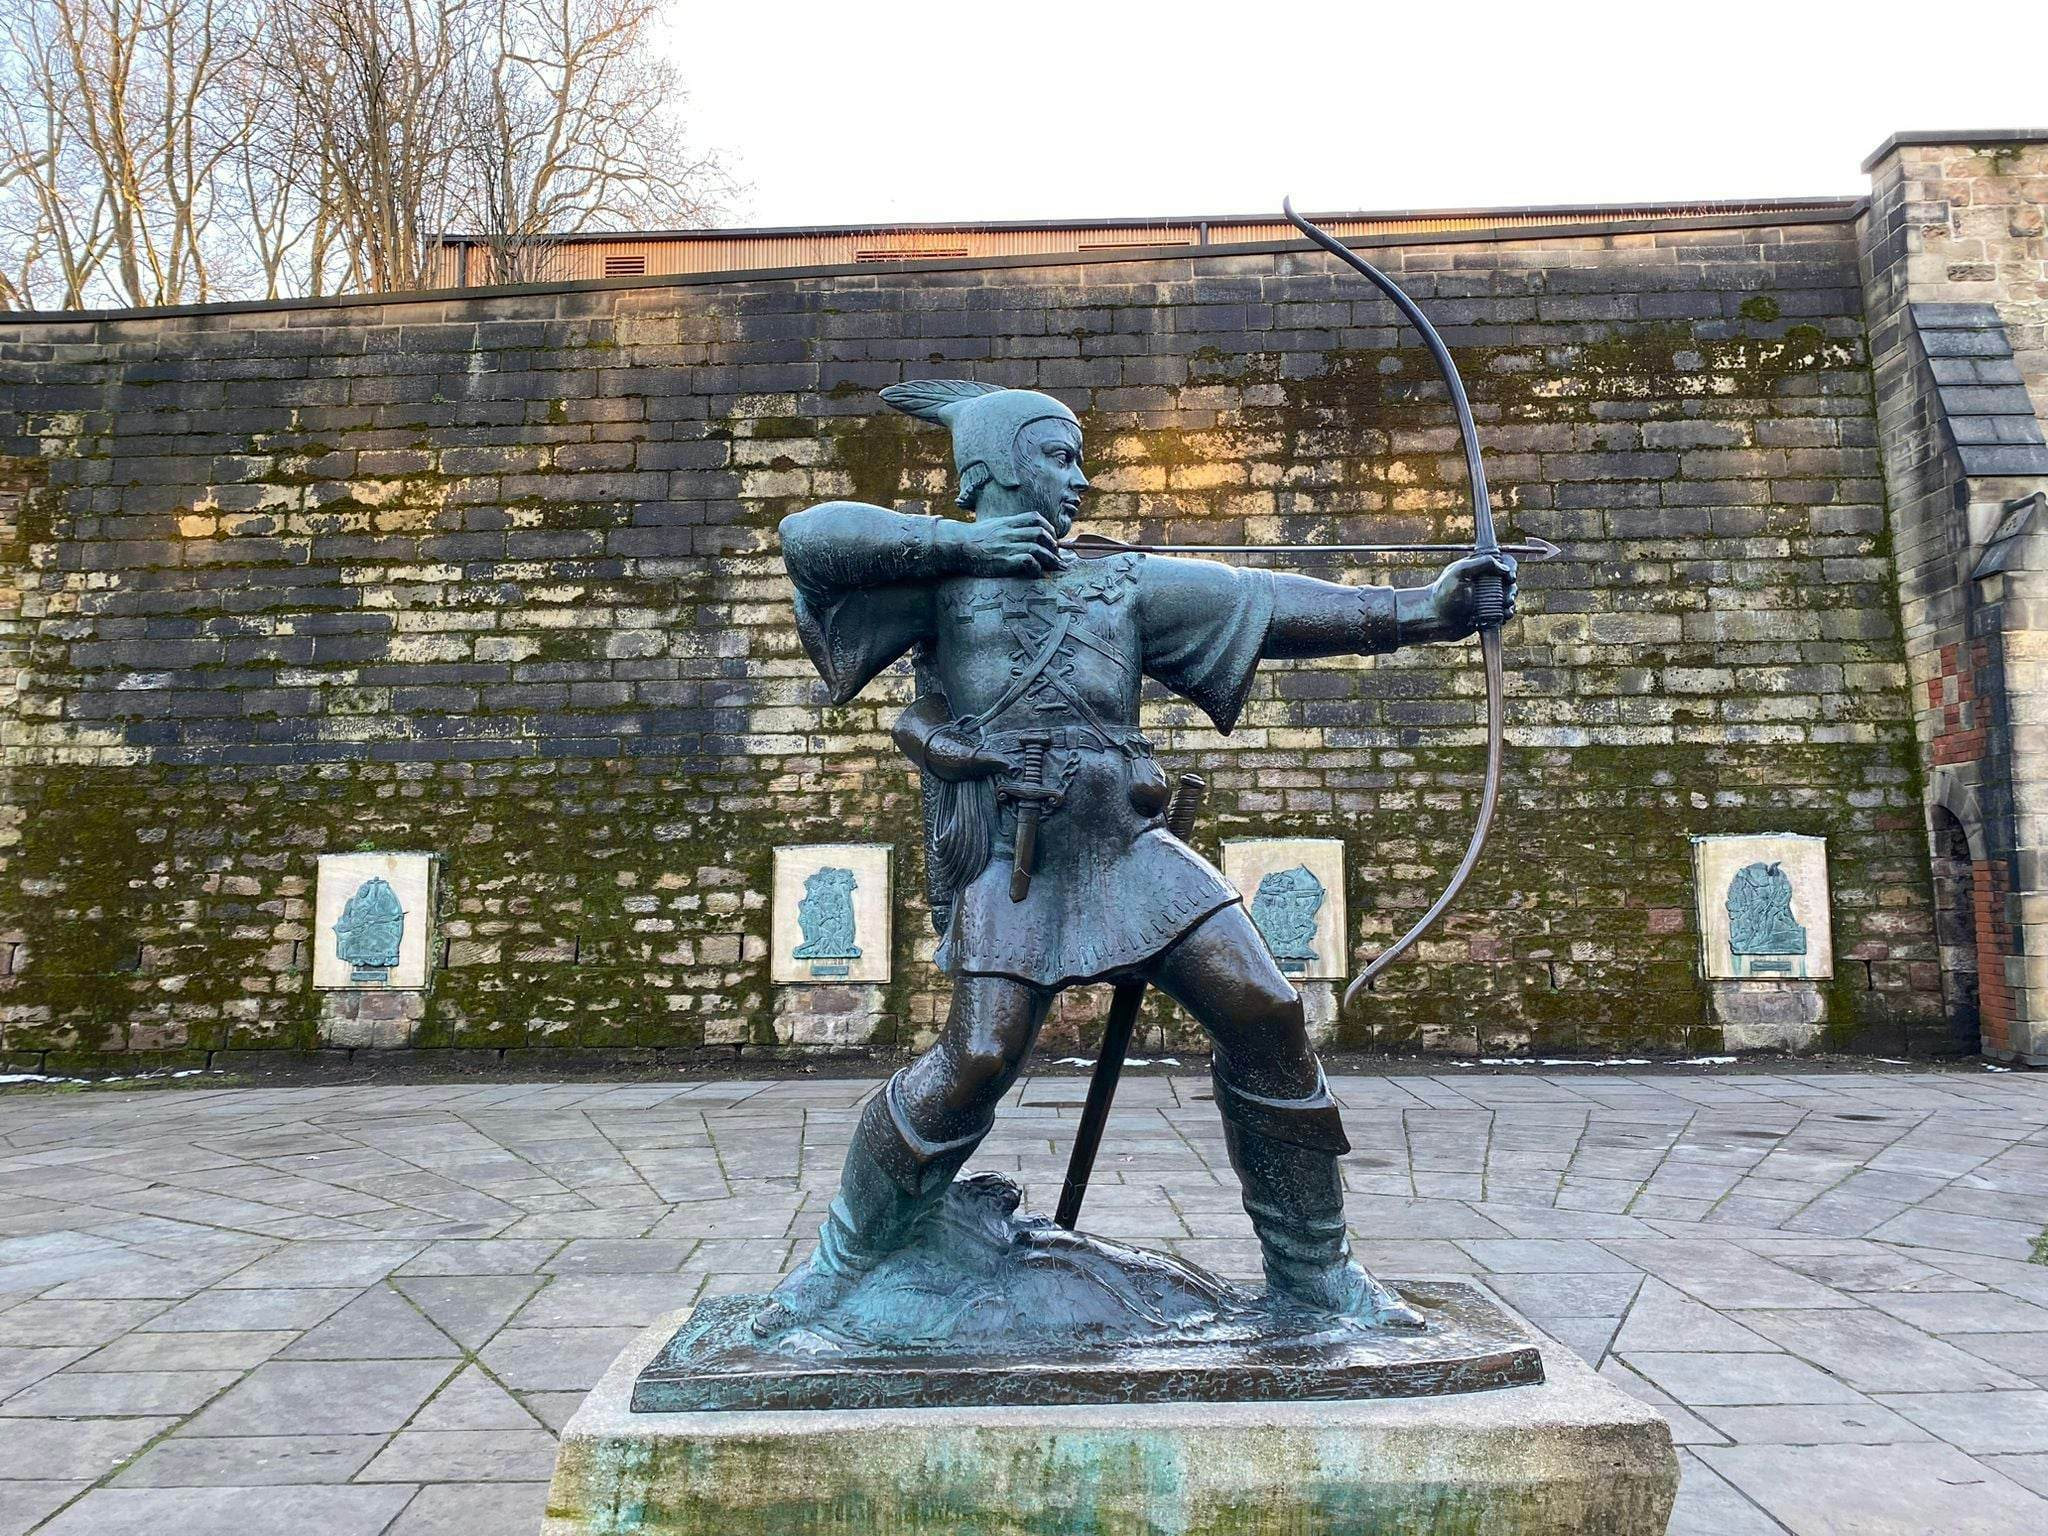 🏹 Maid Marian and Robin Hood's Nottingham Adventures image